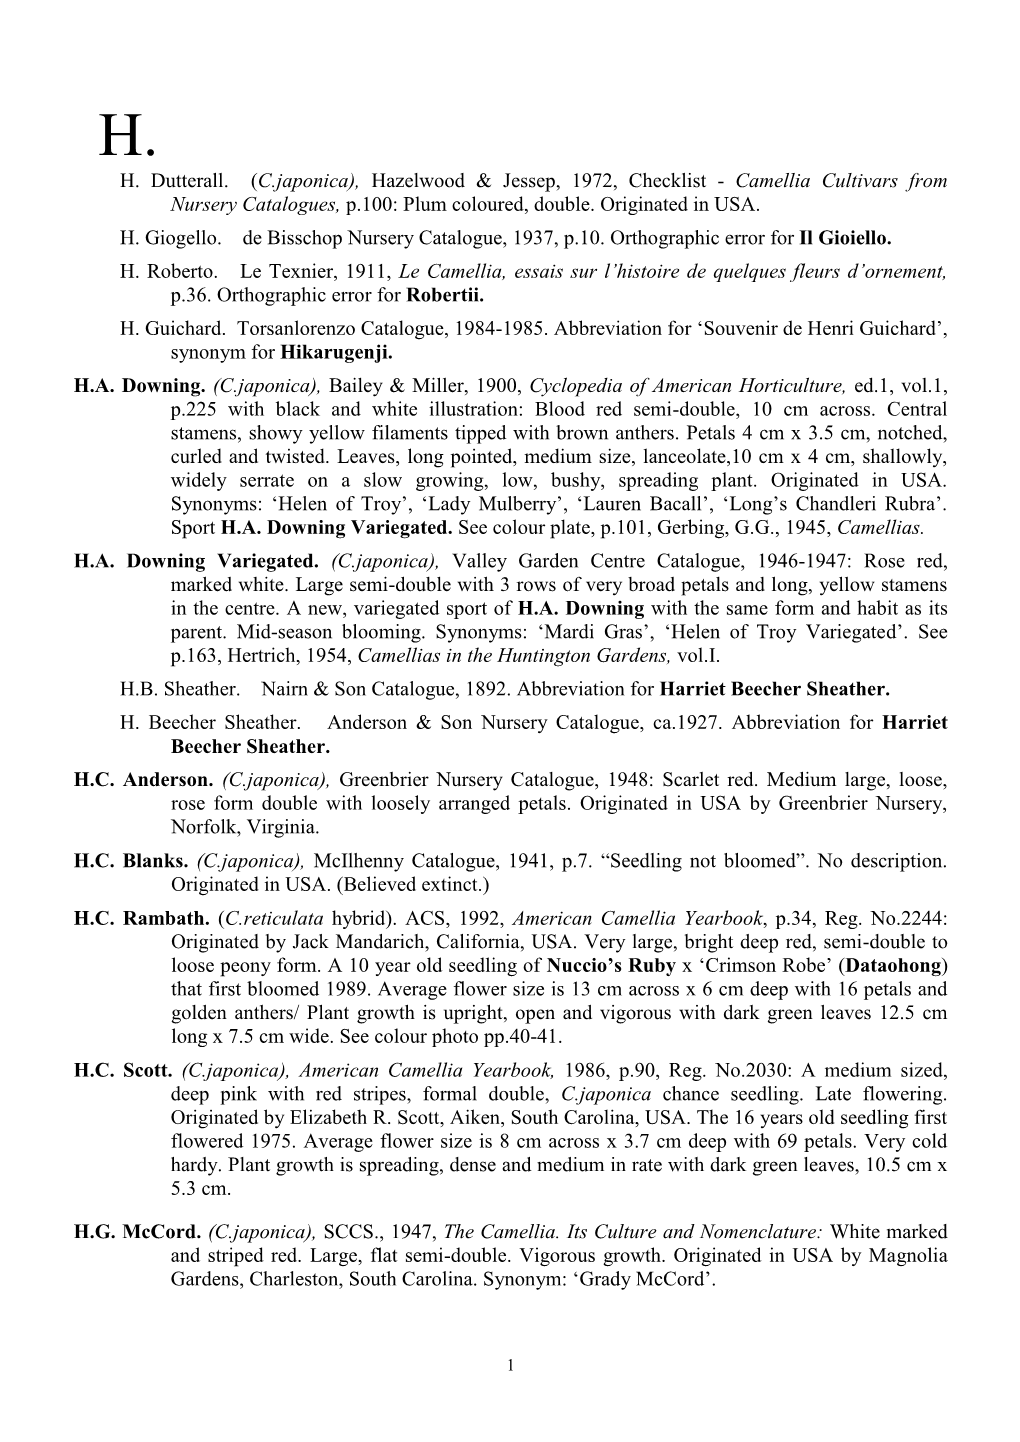 H. Dutterall. (C.Japonica), Hazelwood & Jessep, 1972, Checklist - Camellia Cultivars from Nursery Catalogues, P.100: Plum Coloured, Double